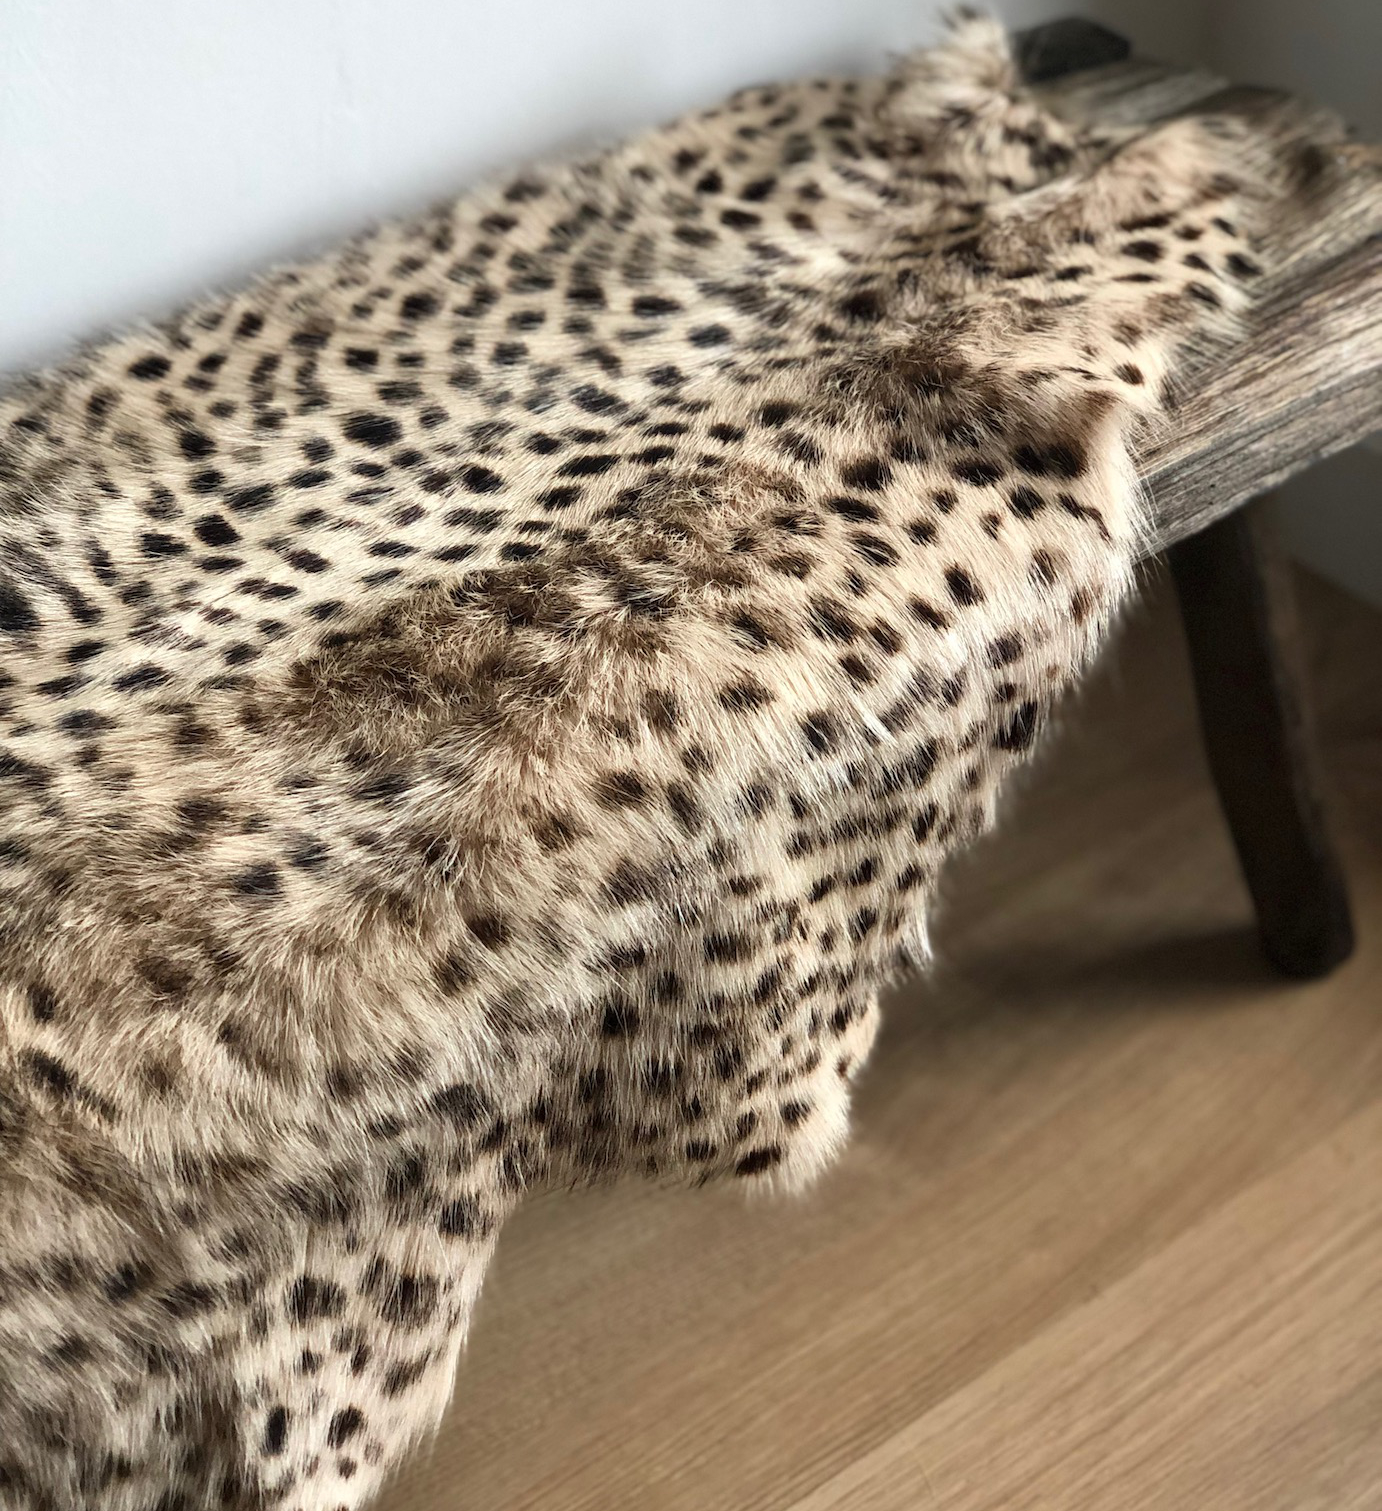 Kuh künstlich Leopard Fell Kunstfell Fell 70x110cm Zebra- Tiger